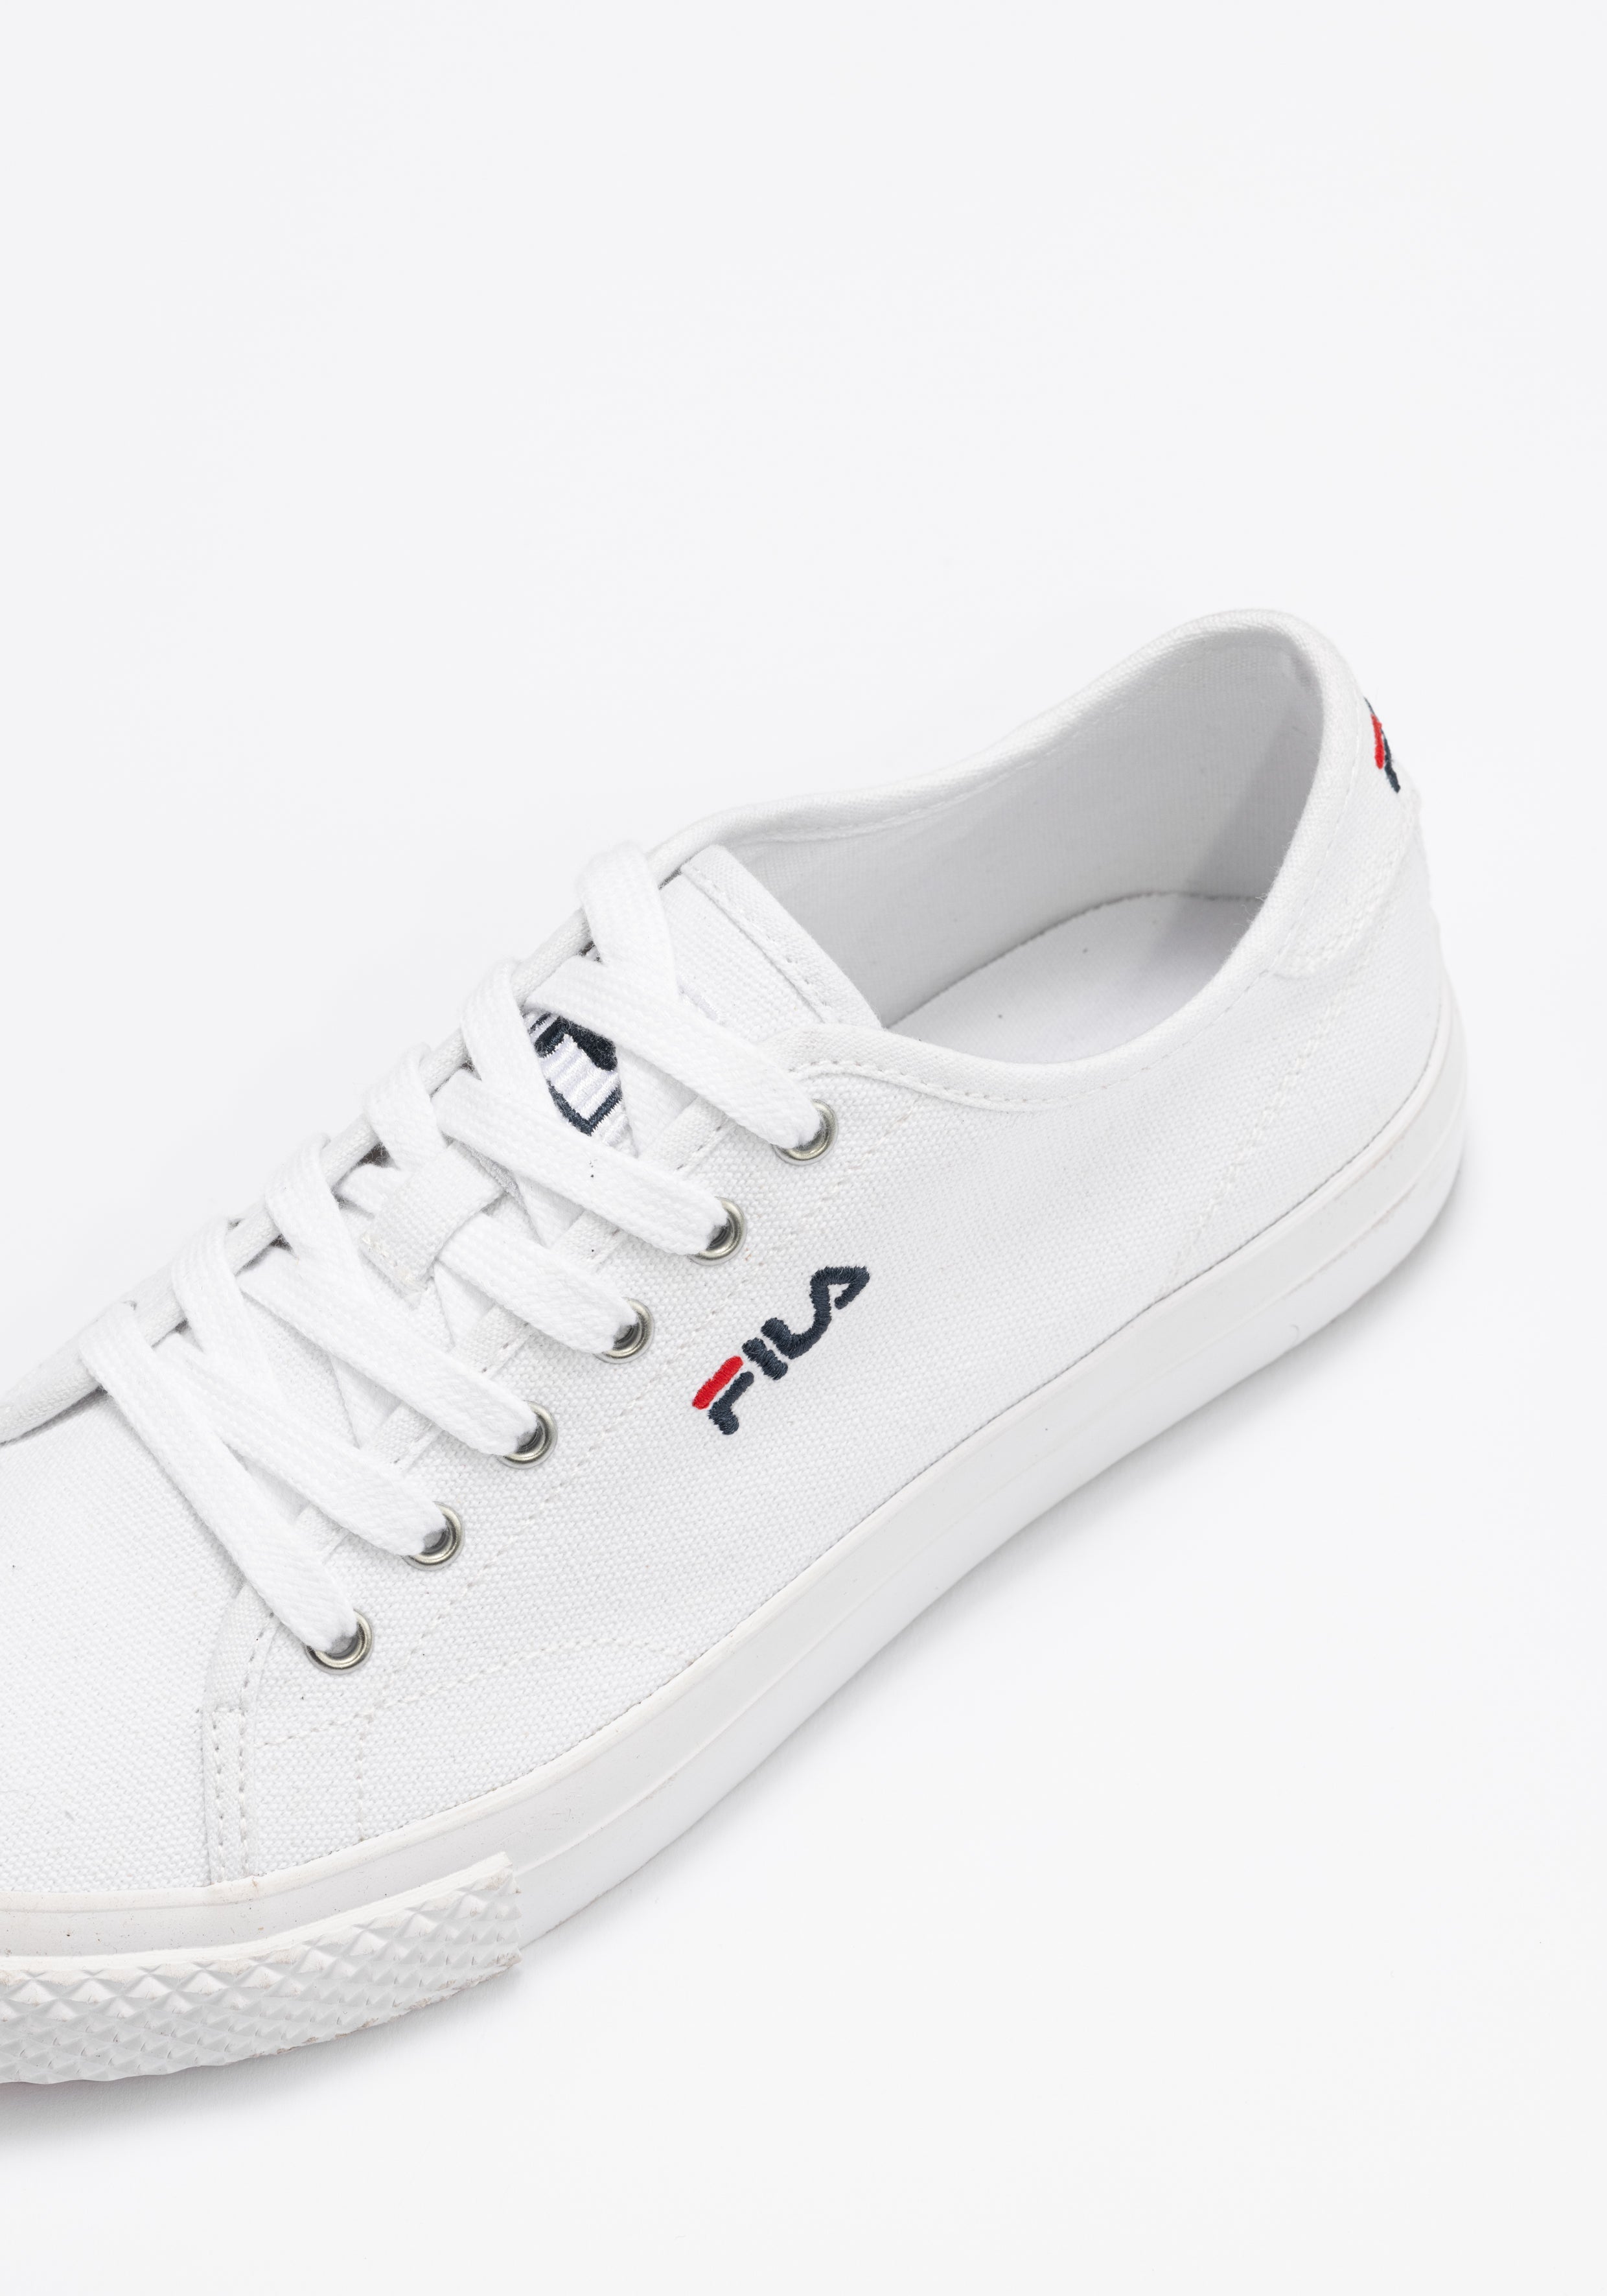 Pointer Classic Herren White Sneakers Fila   